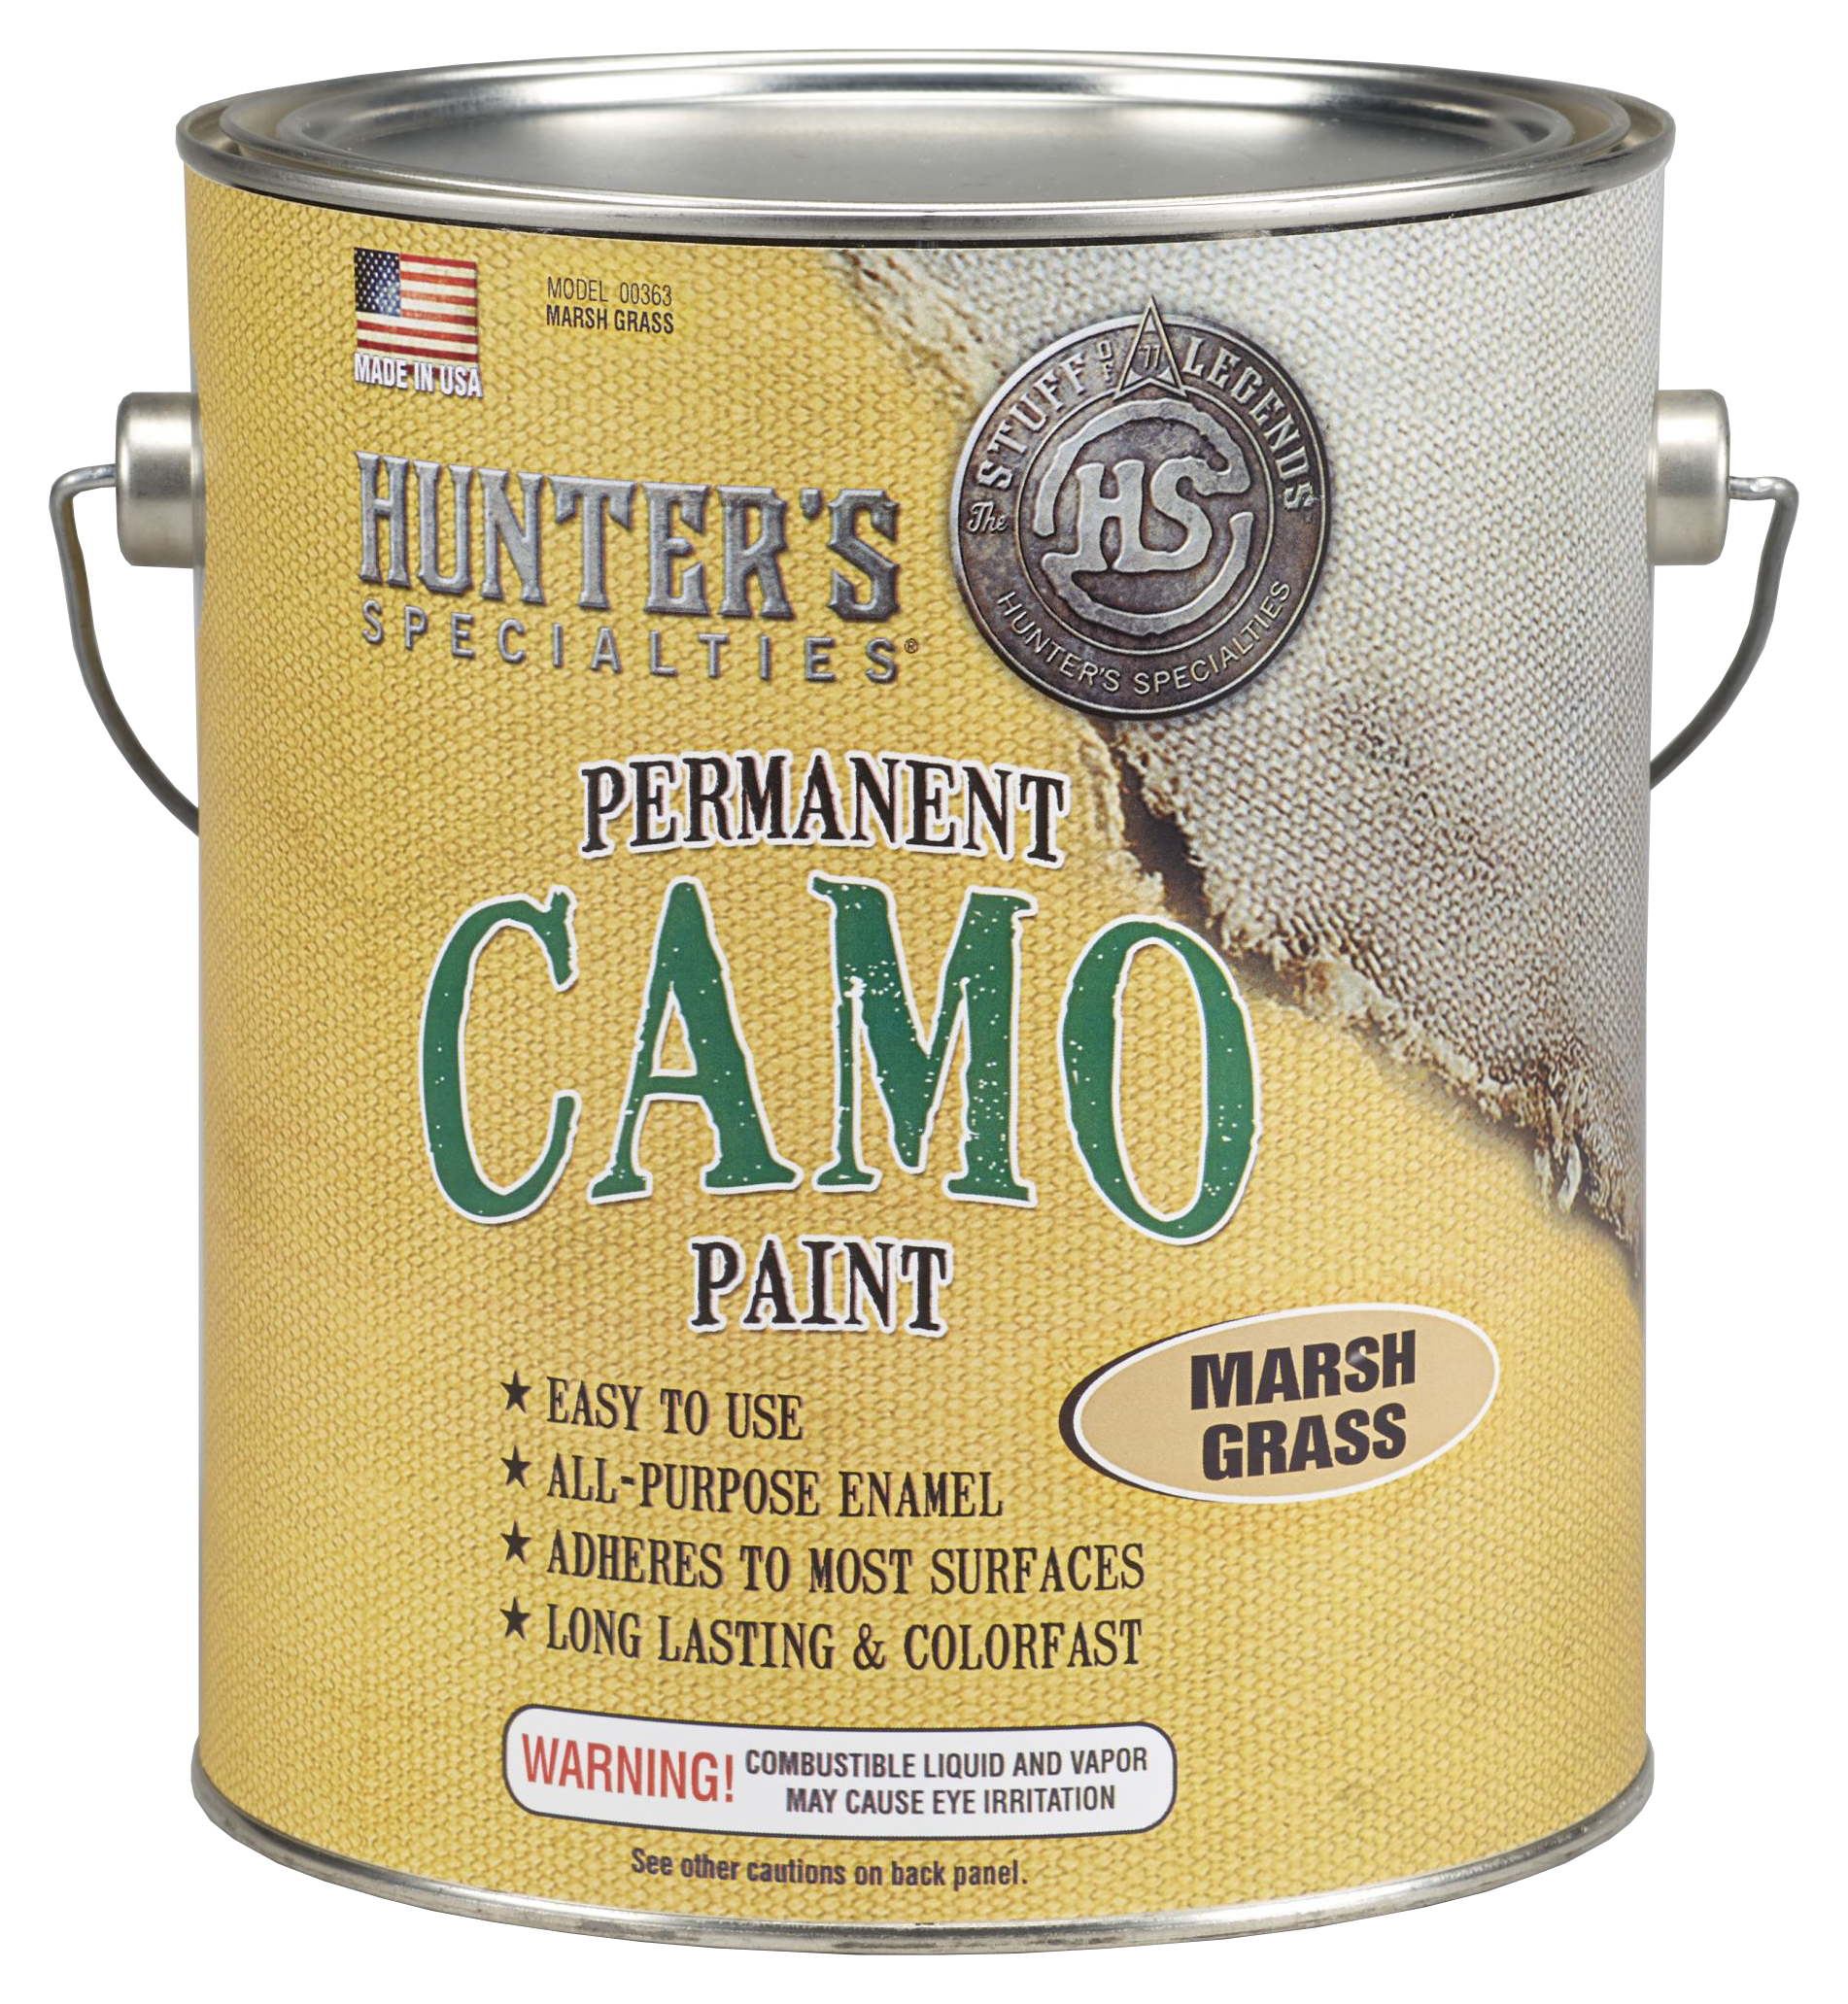  Hunters Specialties Camo Spray Paint Kit : Hunting